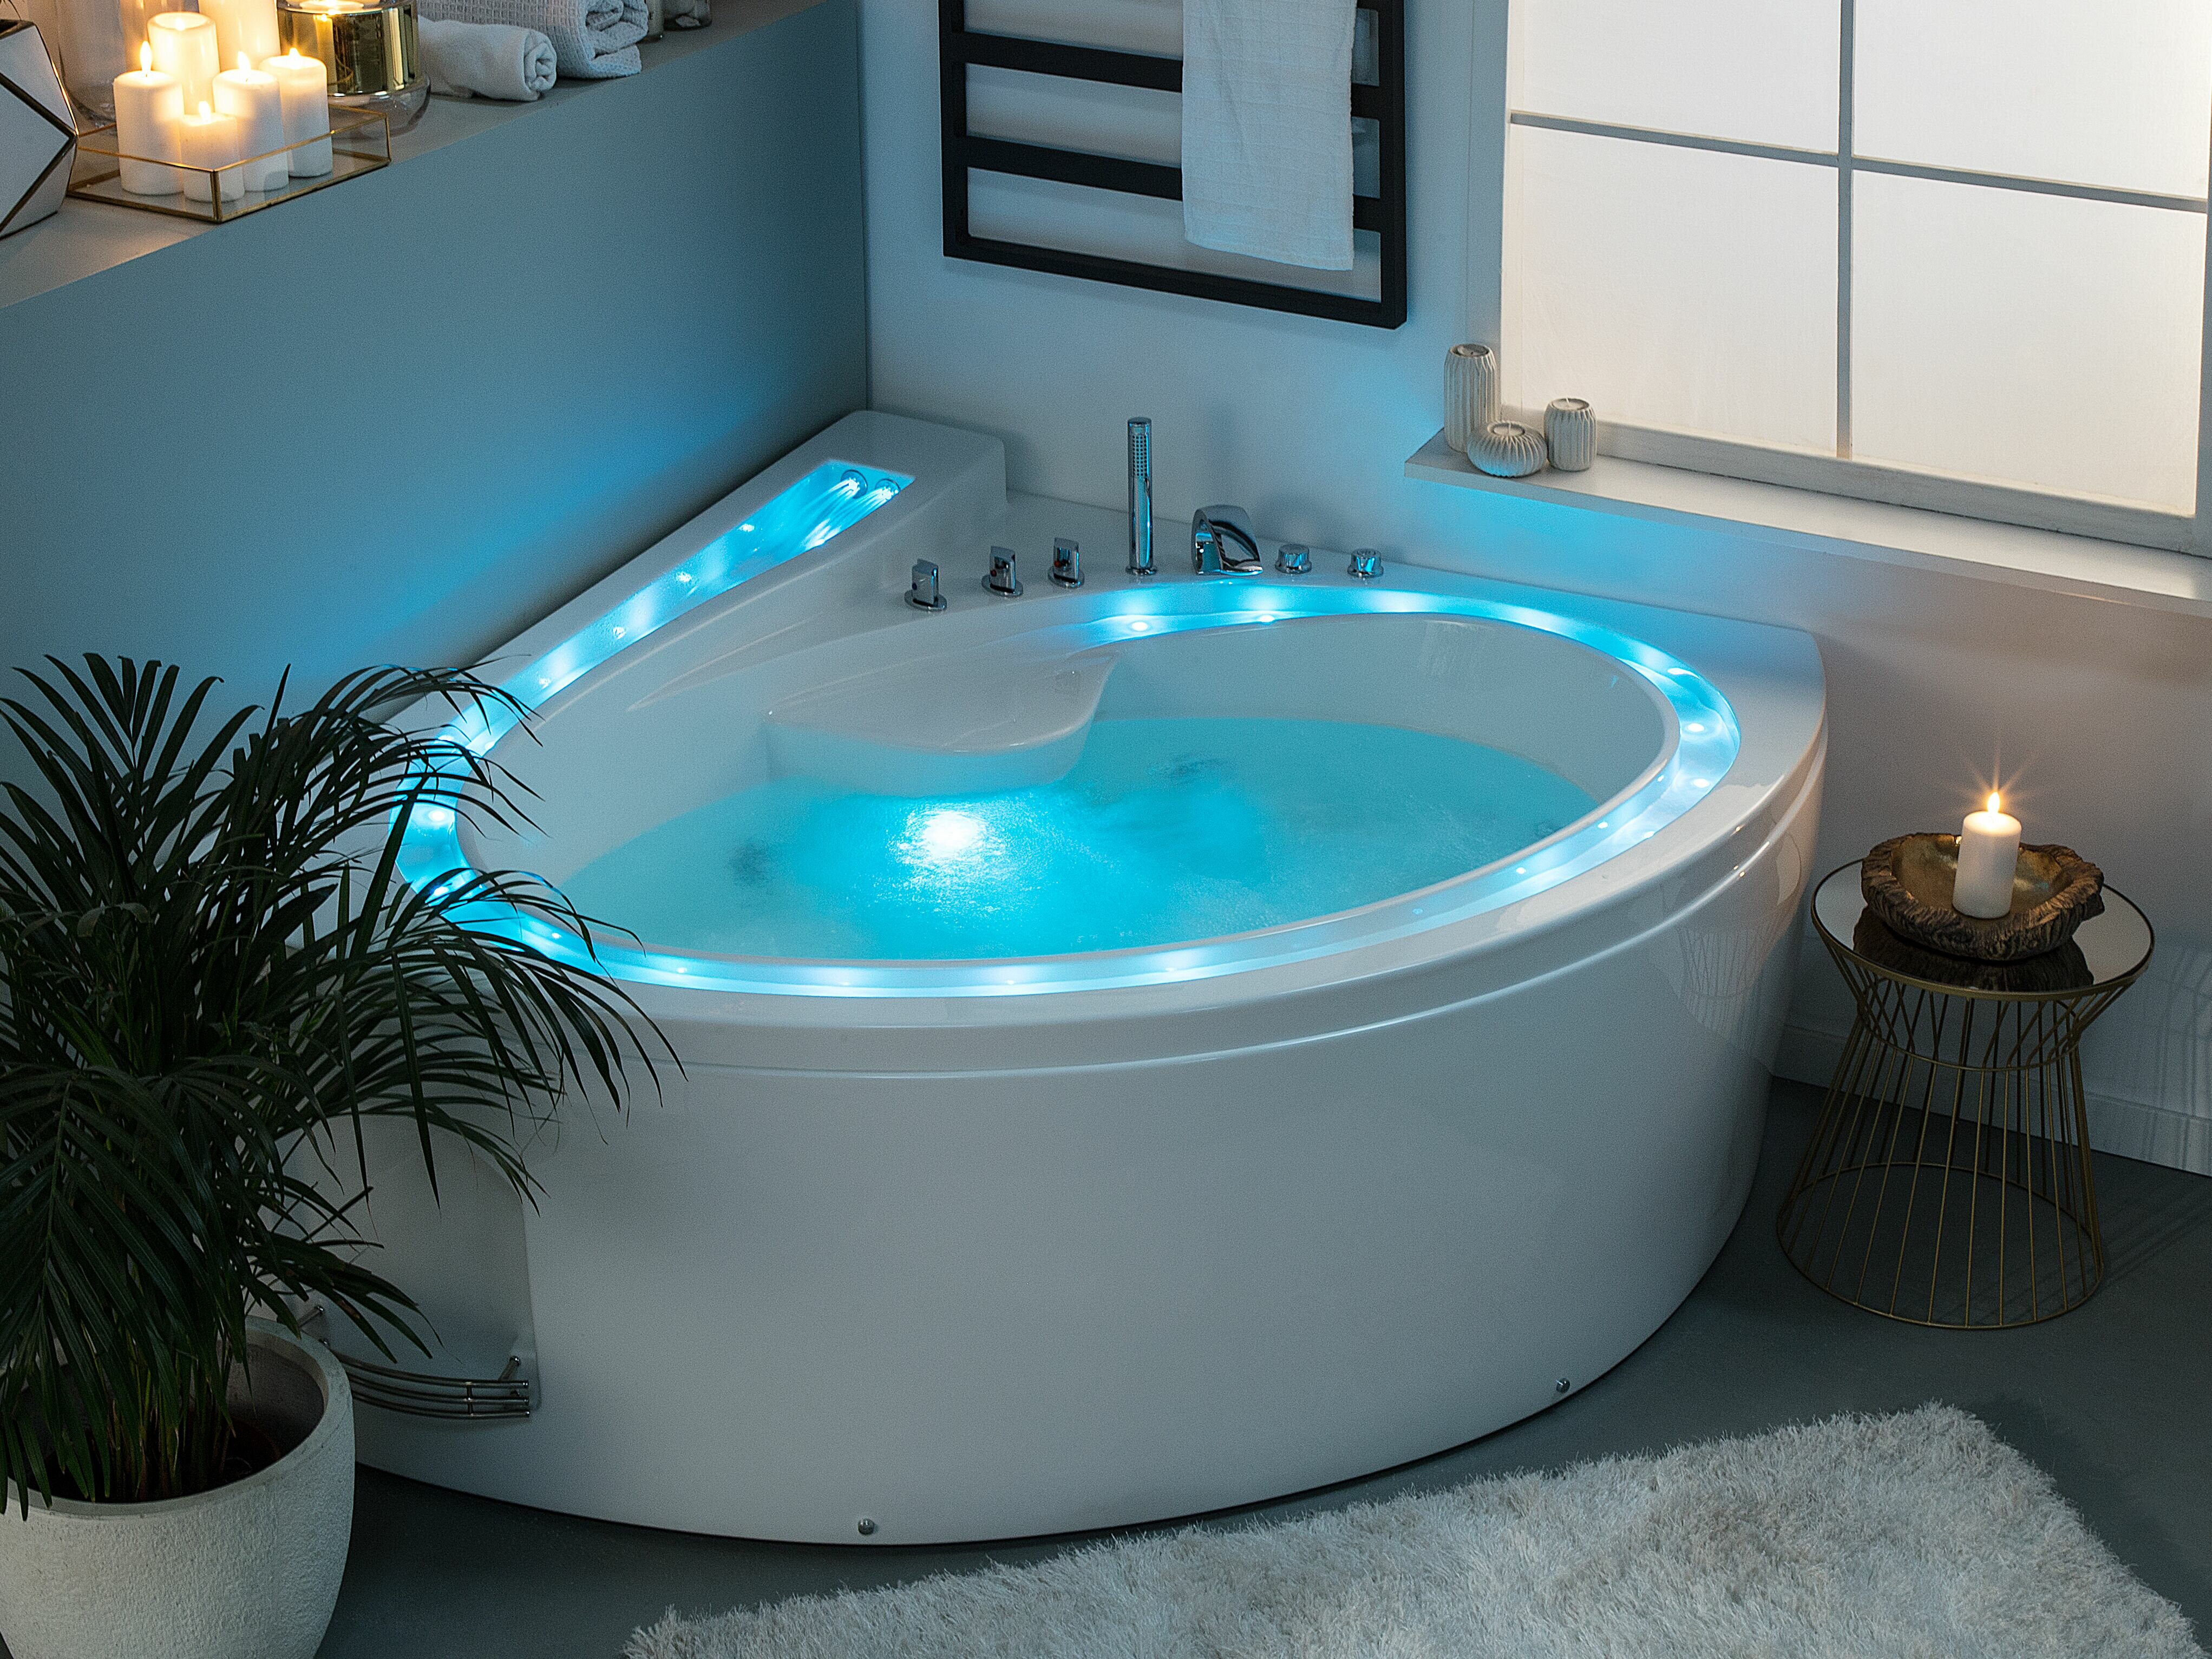 Belfry Bathroom Pelican Turrella 206mm x 164mm Back to Wall Whirlpool  Bathtub with 9 Jets | Wayfair.co.uk